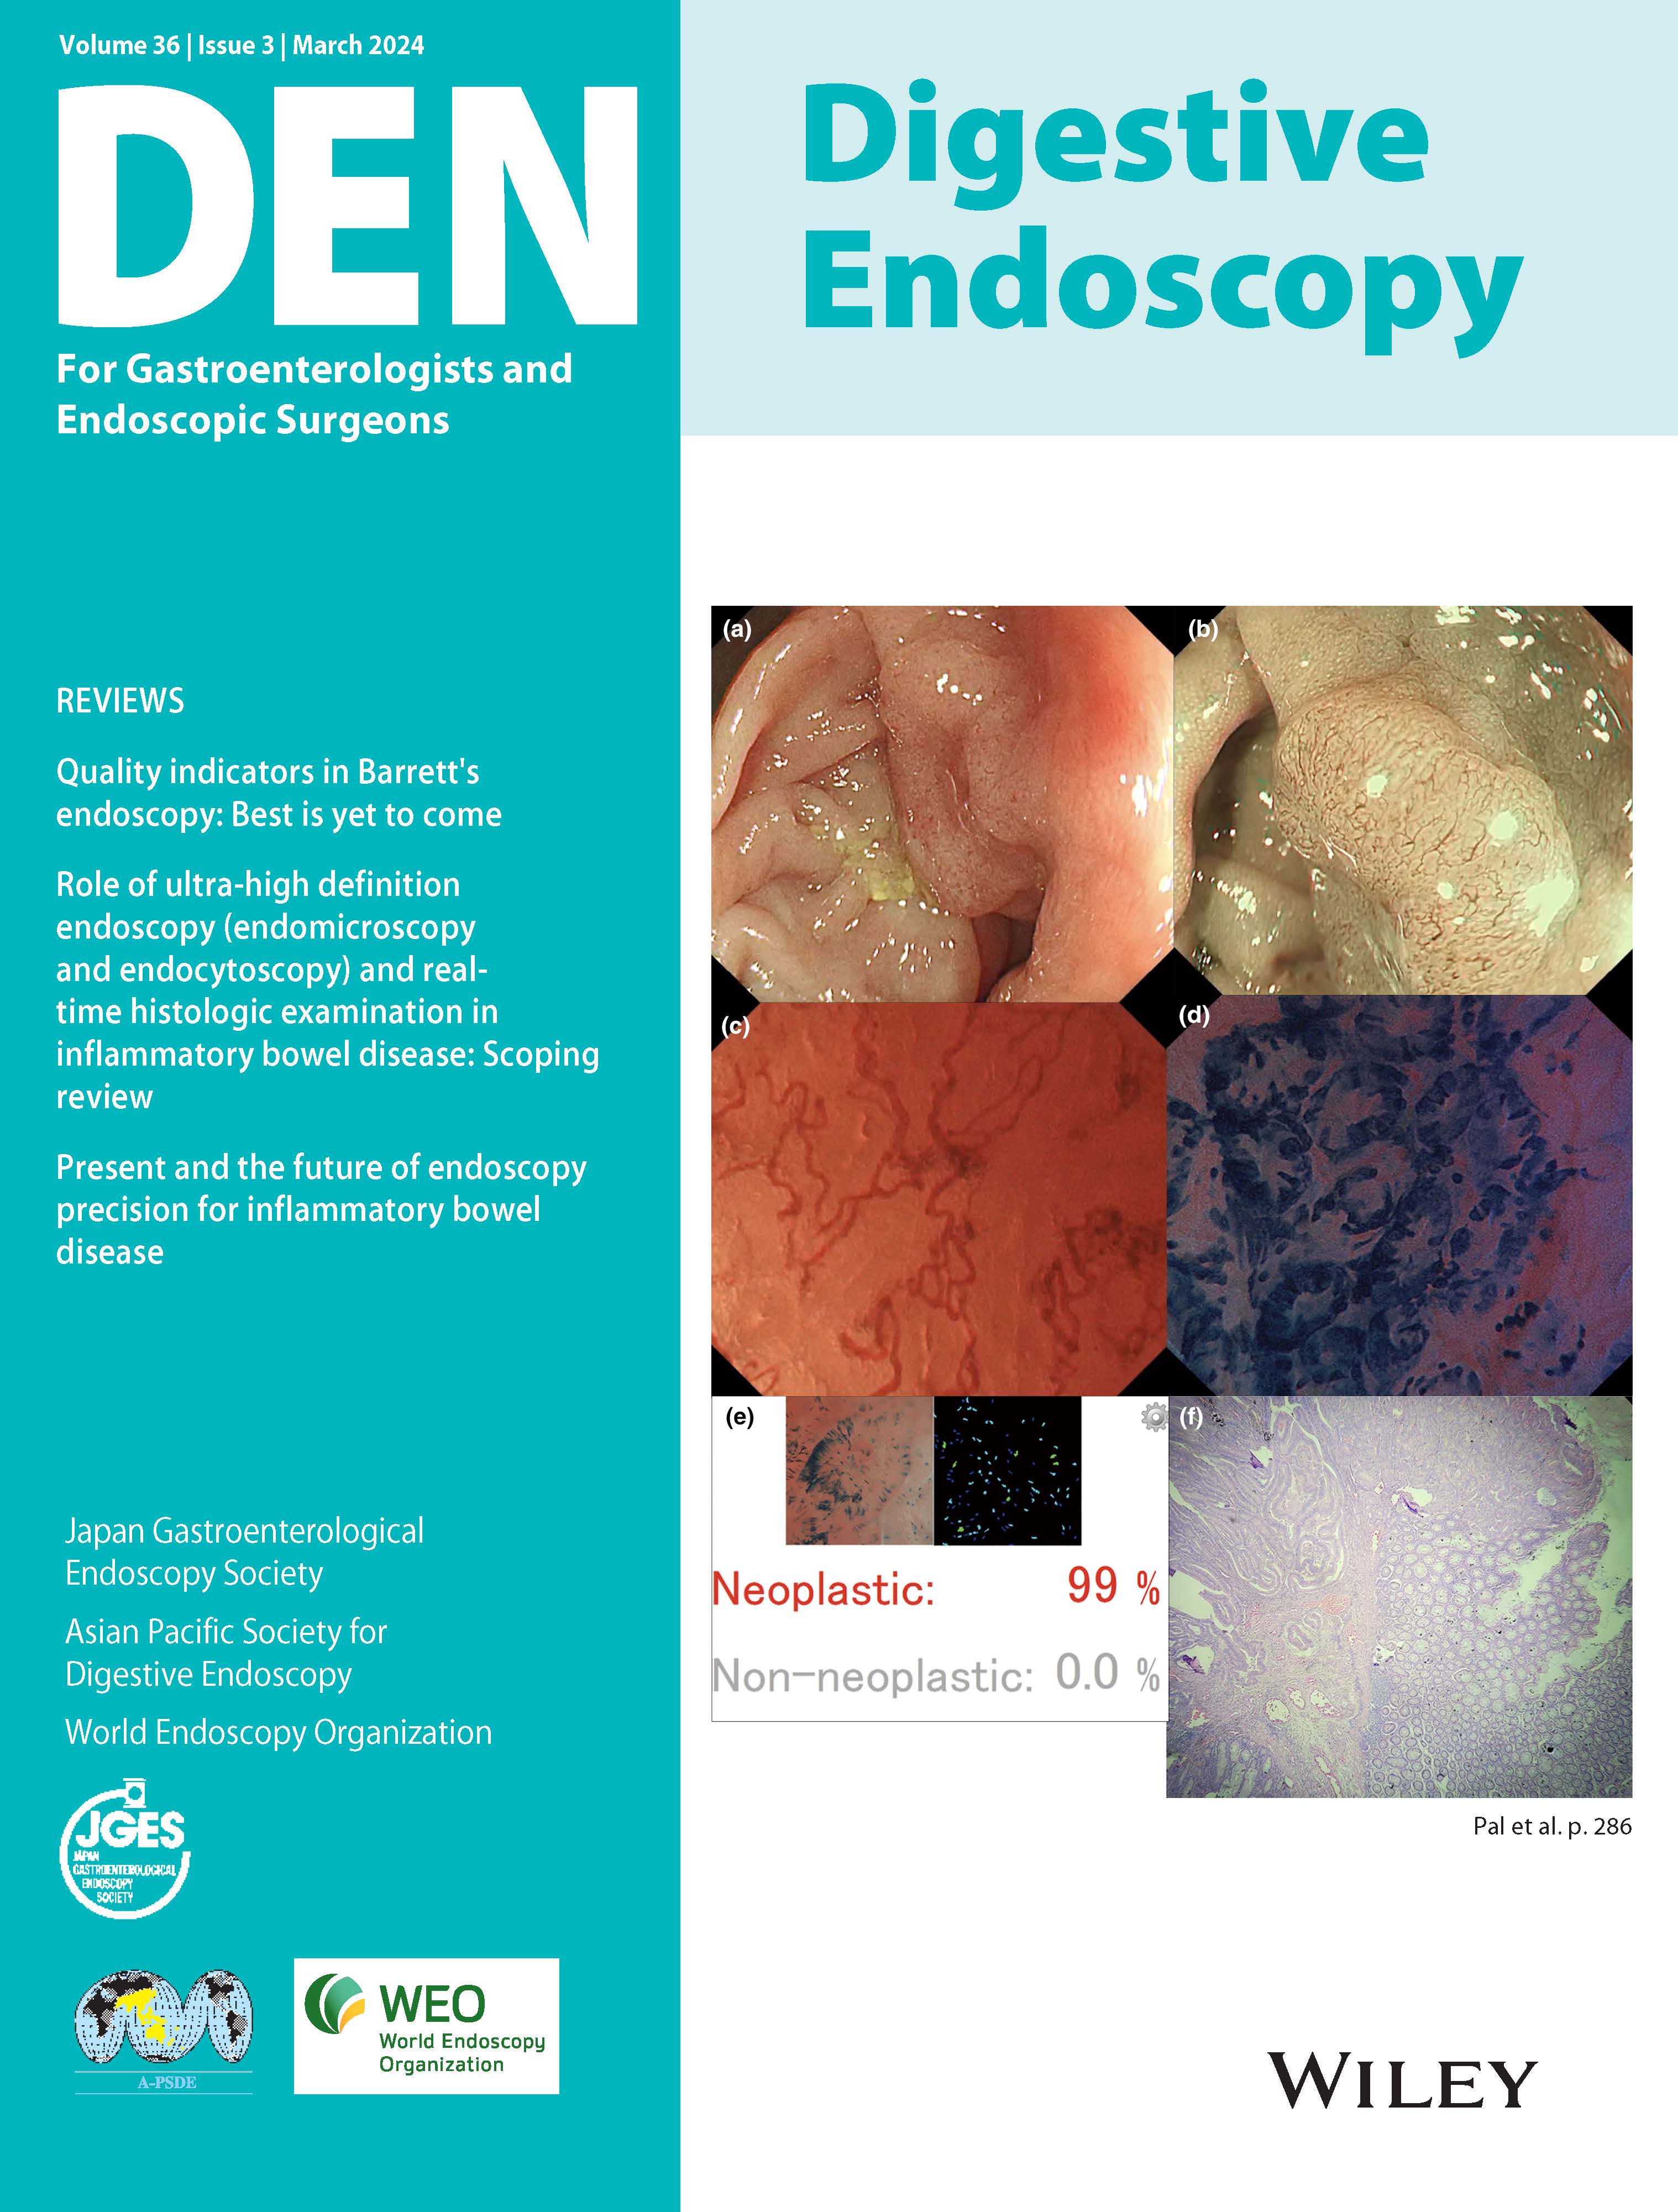 Digestive Endoscopy Vol36-3